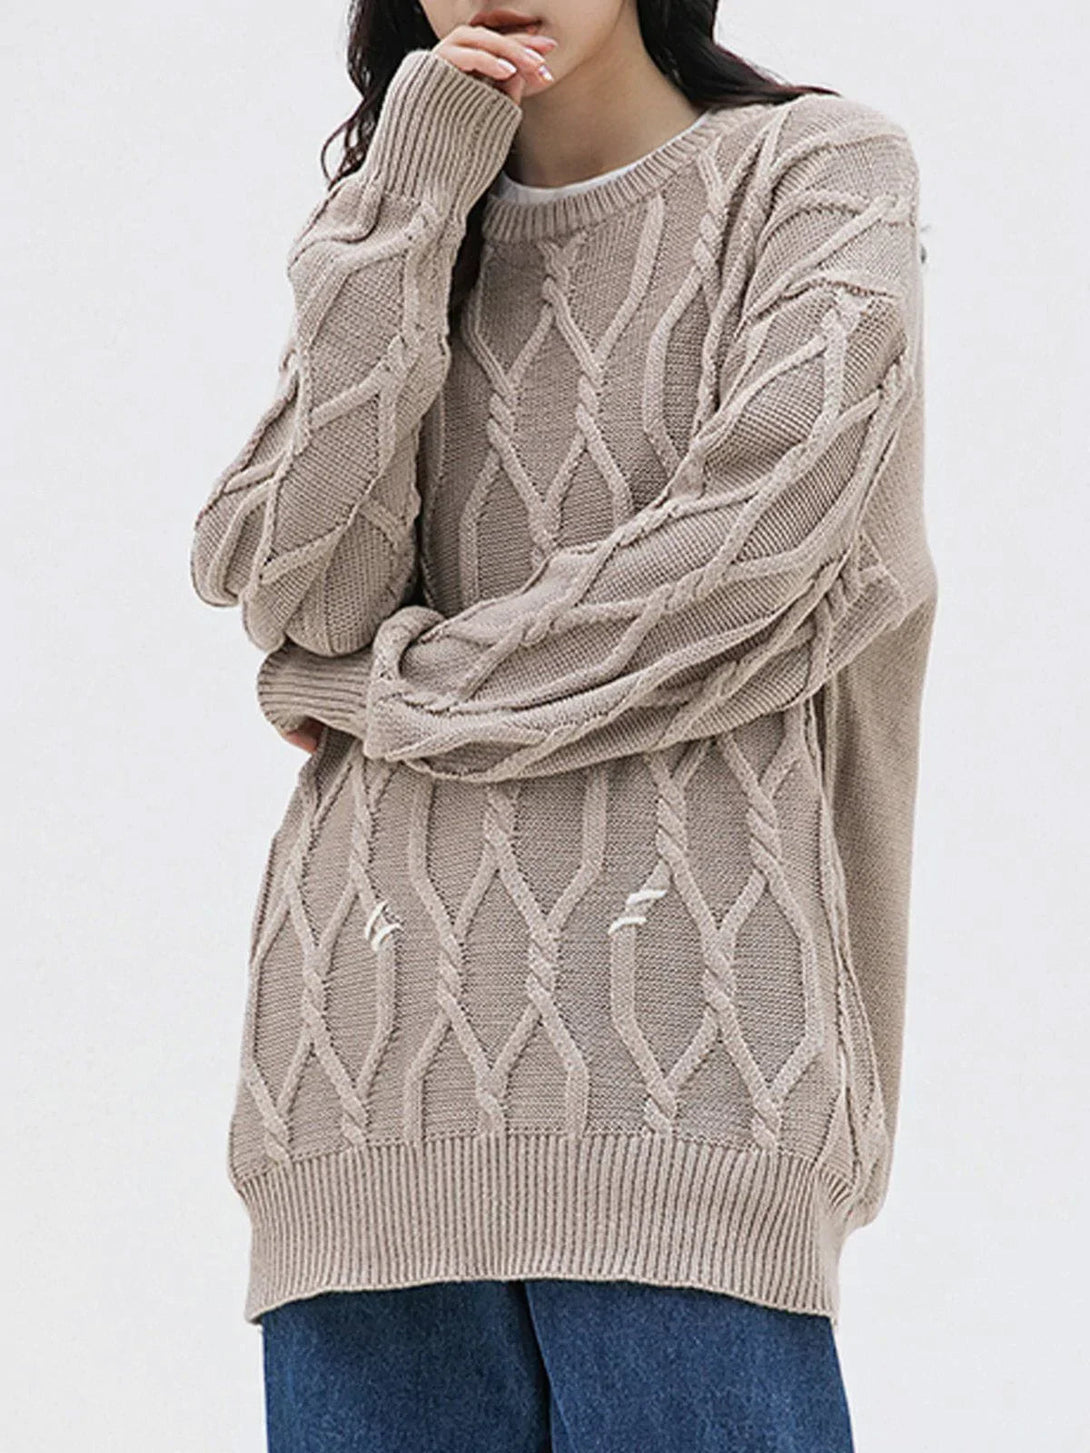 Majesda® - Rhombus Plaid Sweater outfit ideas streetwear fashion